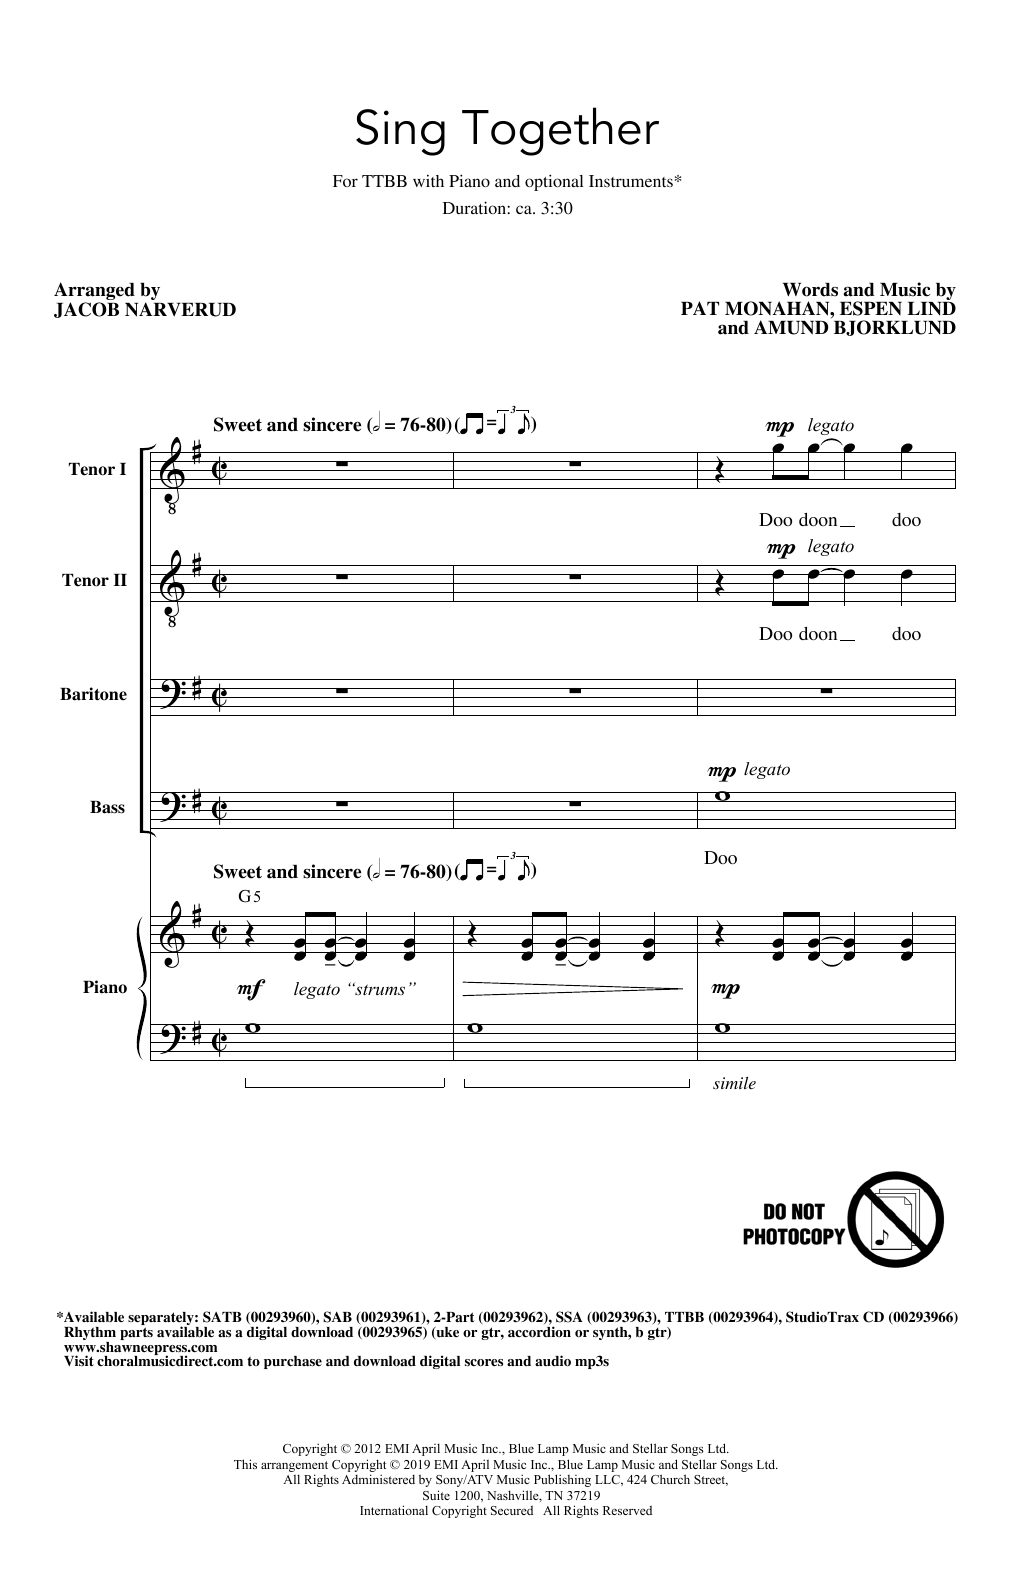 Train Sing Together (arr. Jacob Narverud) Sheet Music Notes & Chords for TTBB Choir - Download or Print PDF